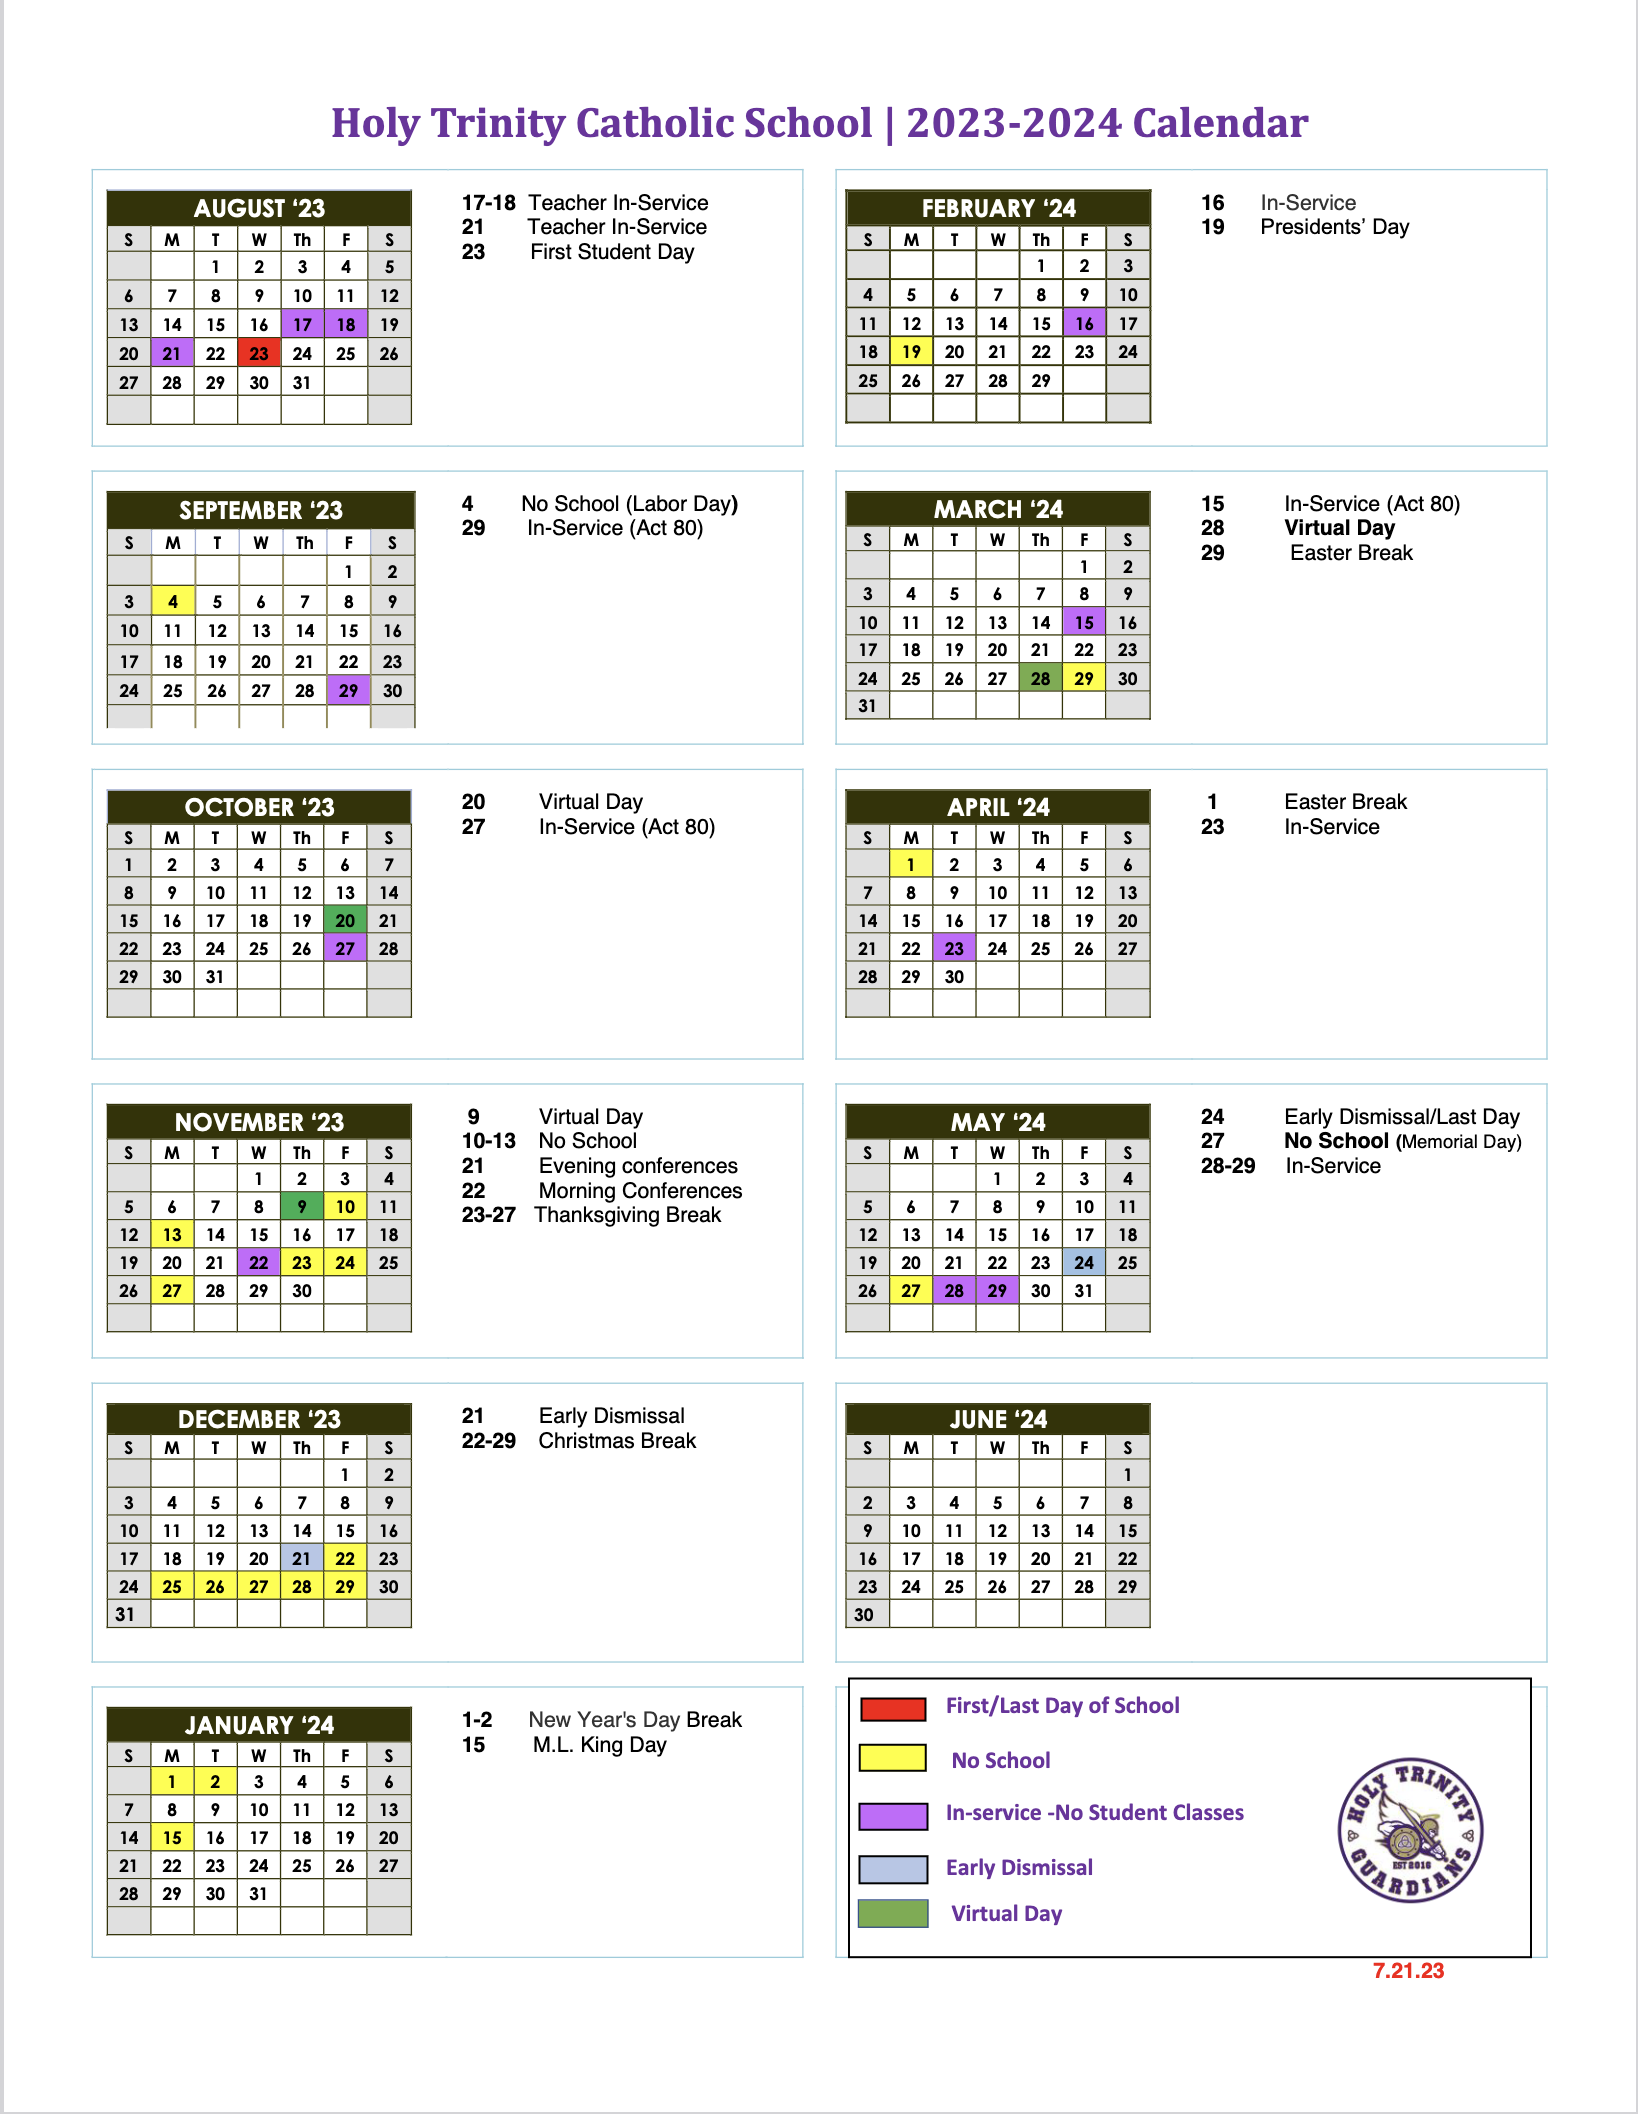 Academic Calendar 2023-2024 – Holy Trinity Catholic School, Altoona PA